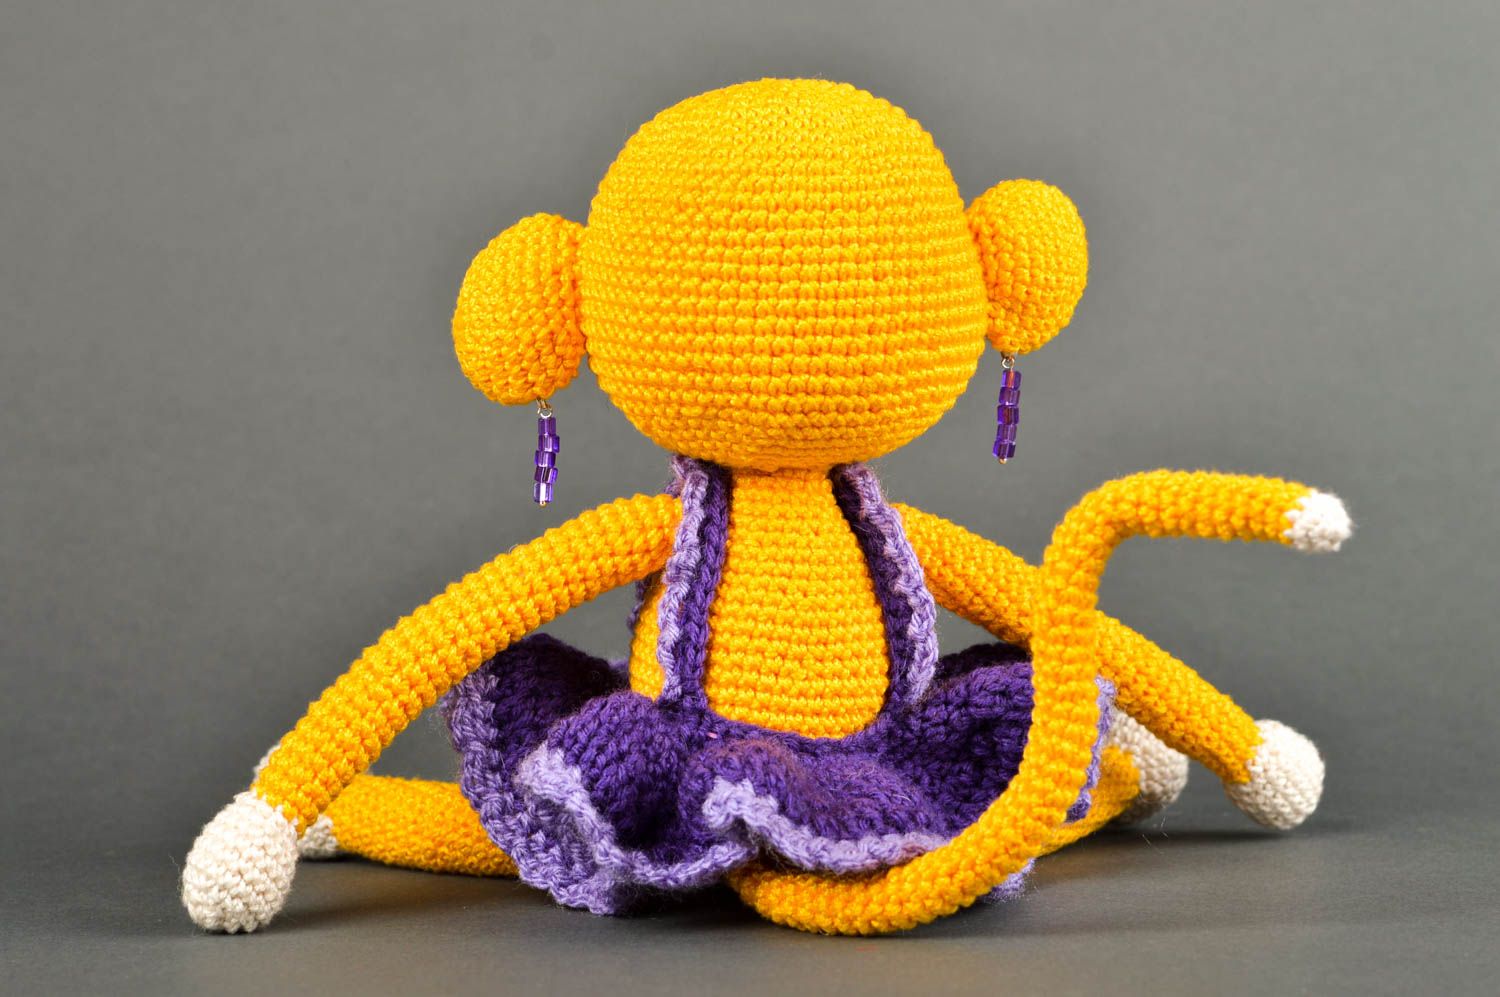 Handmade crocheted toys creative toys for children designer toys nursery decor photo 5